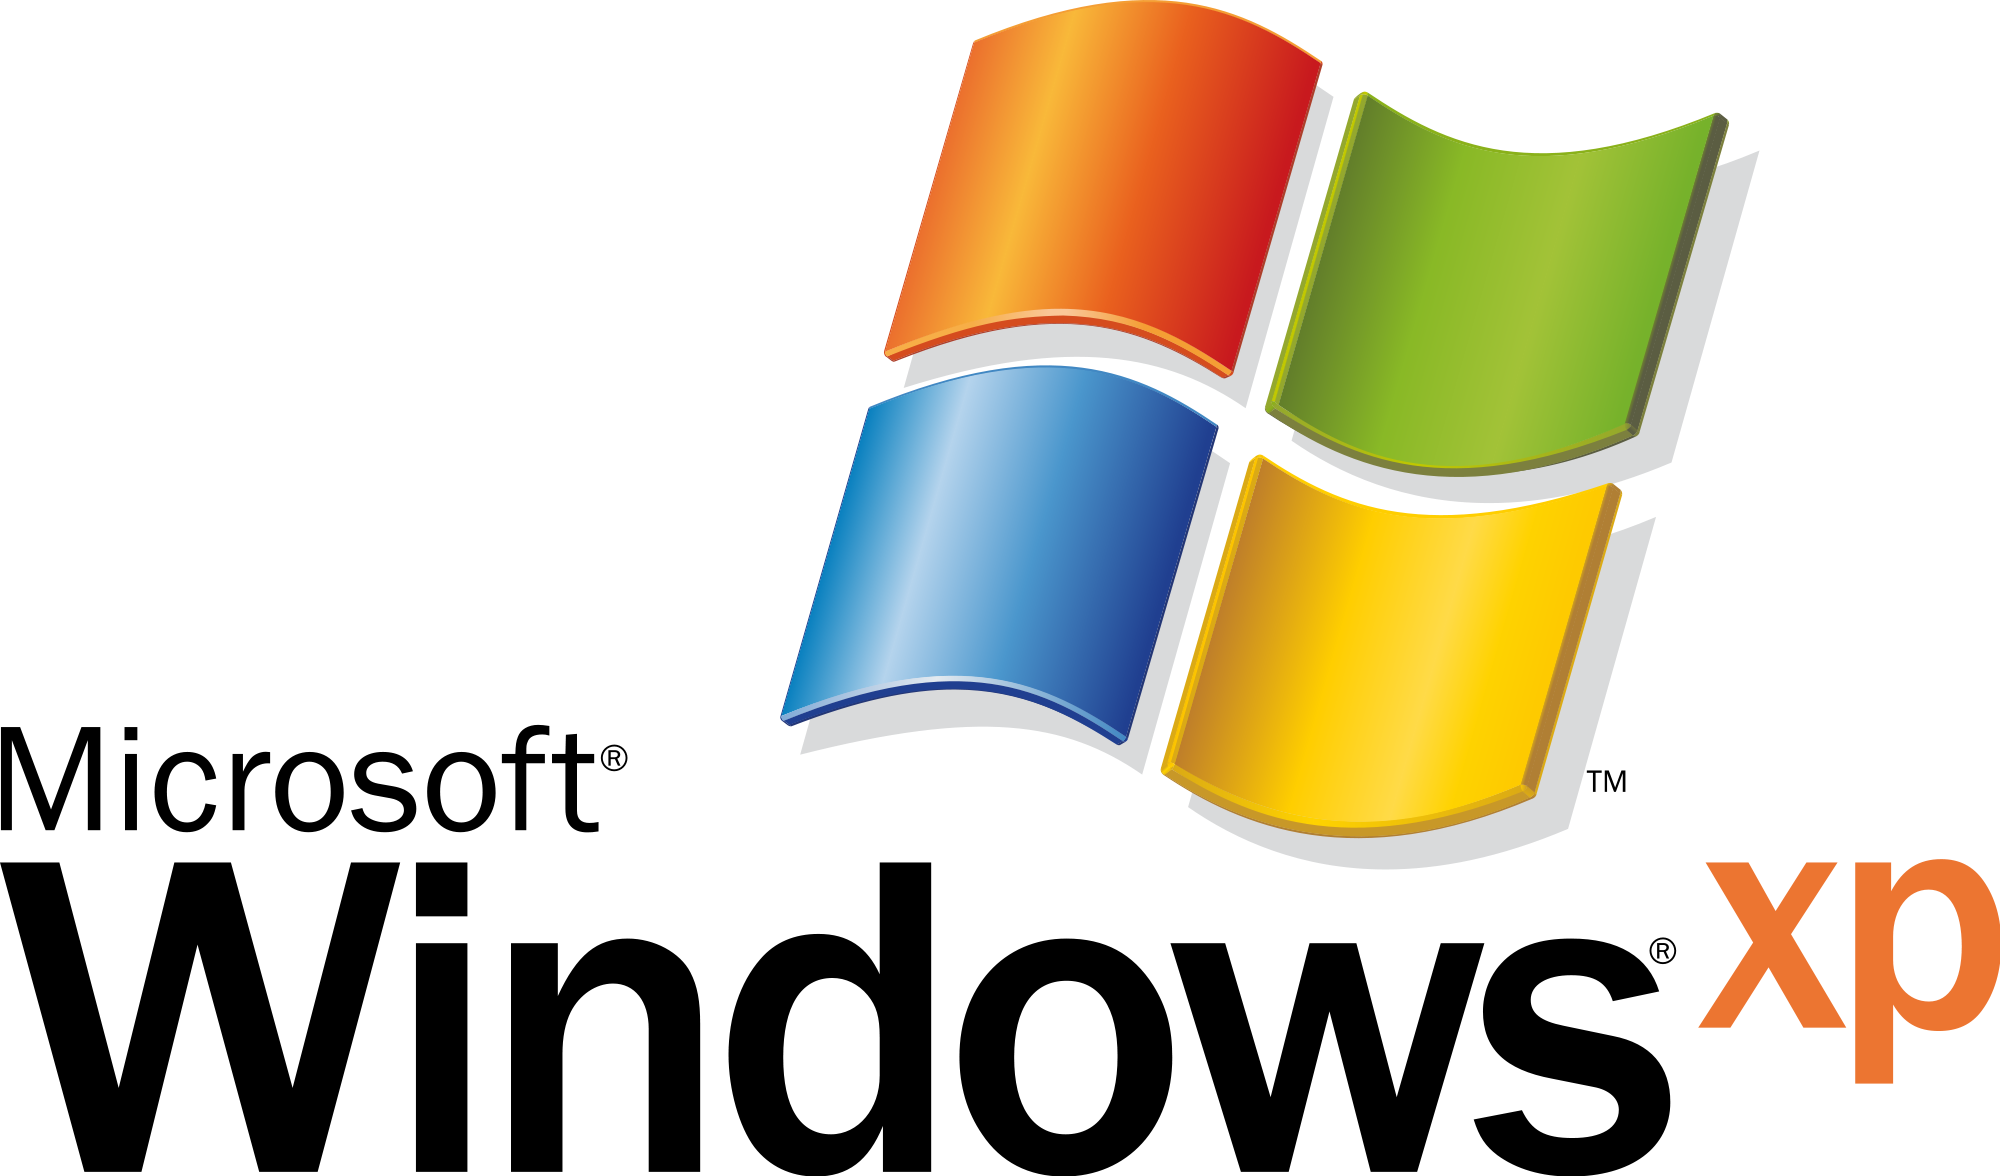 Windows Xp Logo.png - Microsoft Windows, Transparent background PNG HD thumbnail